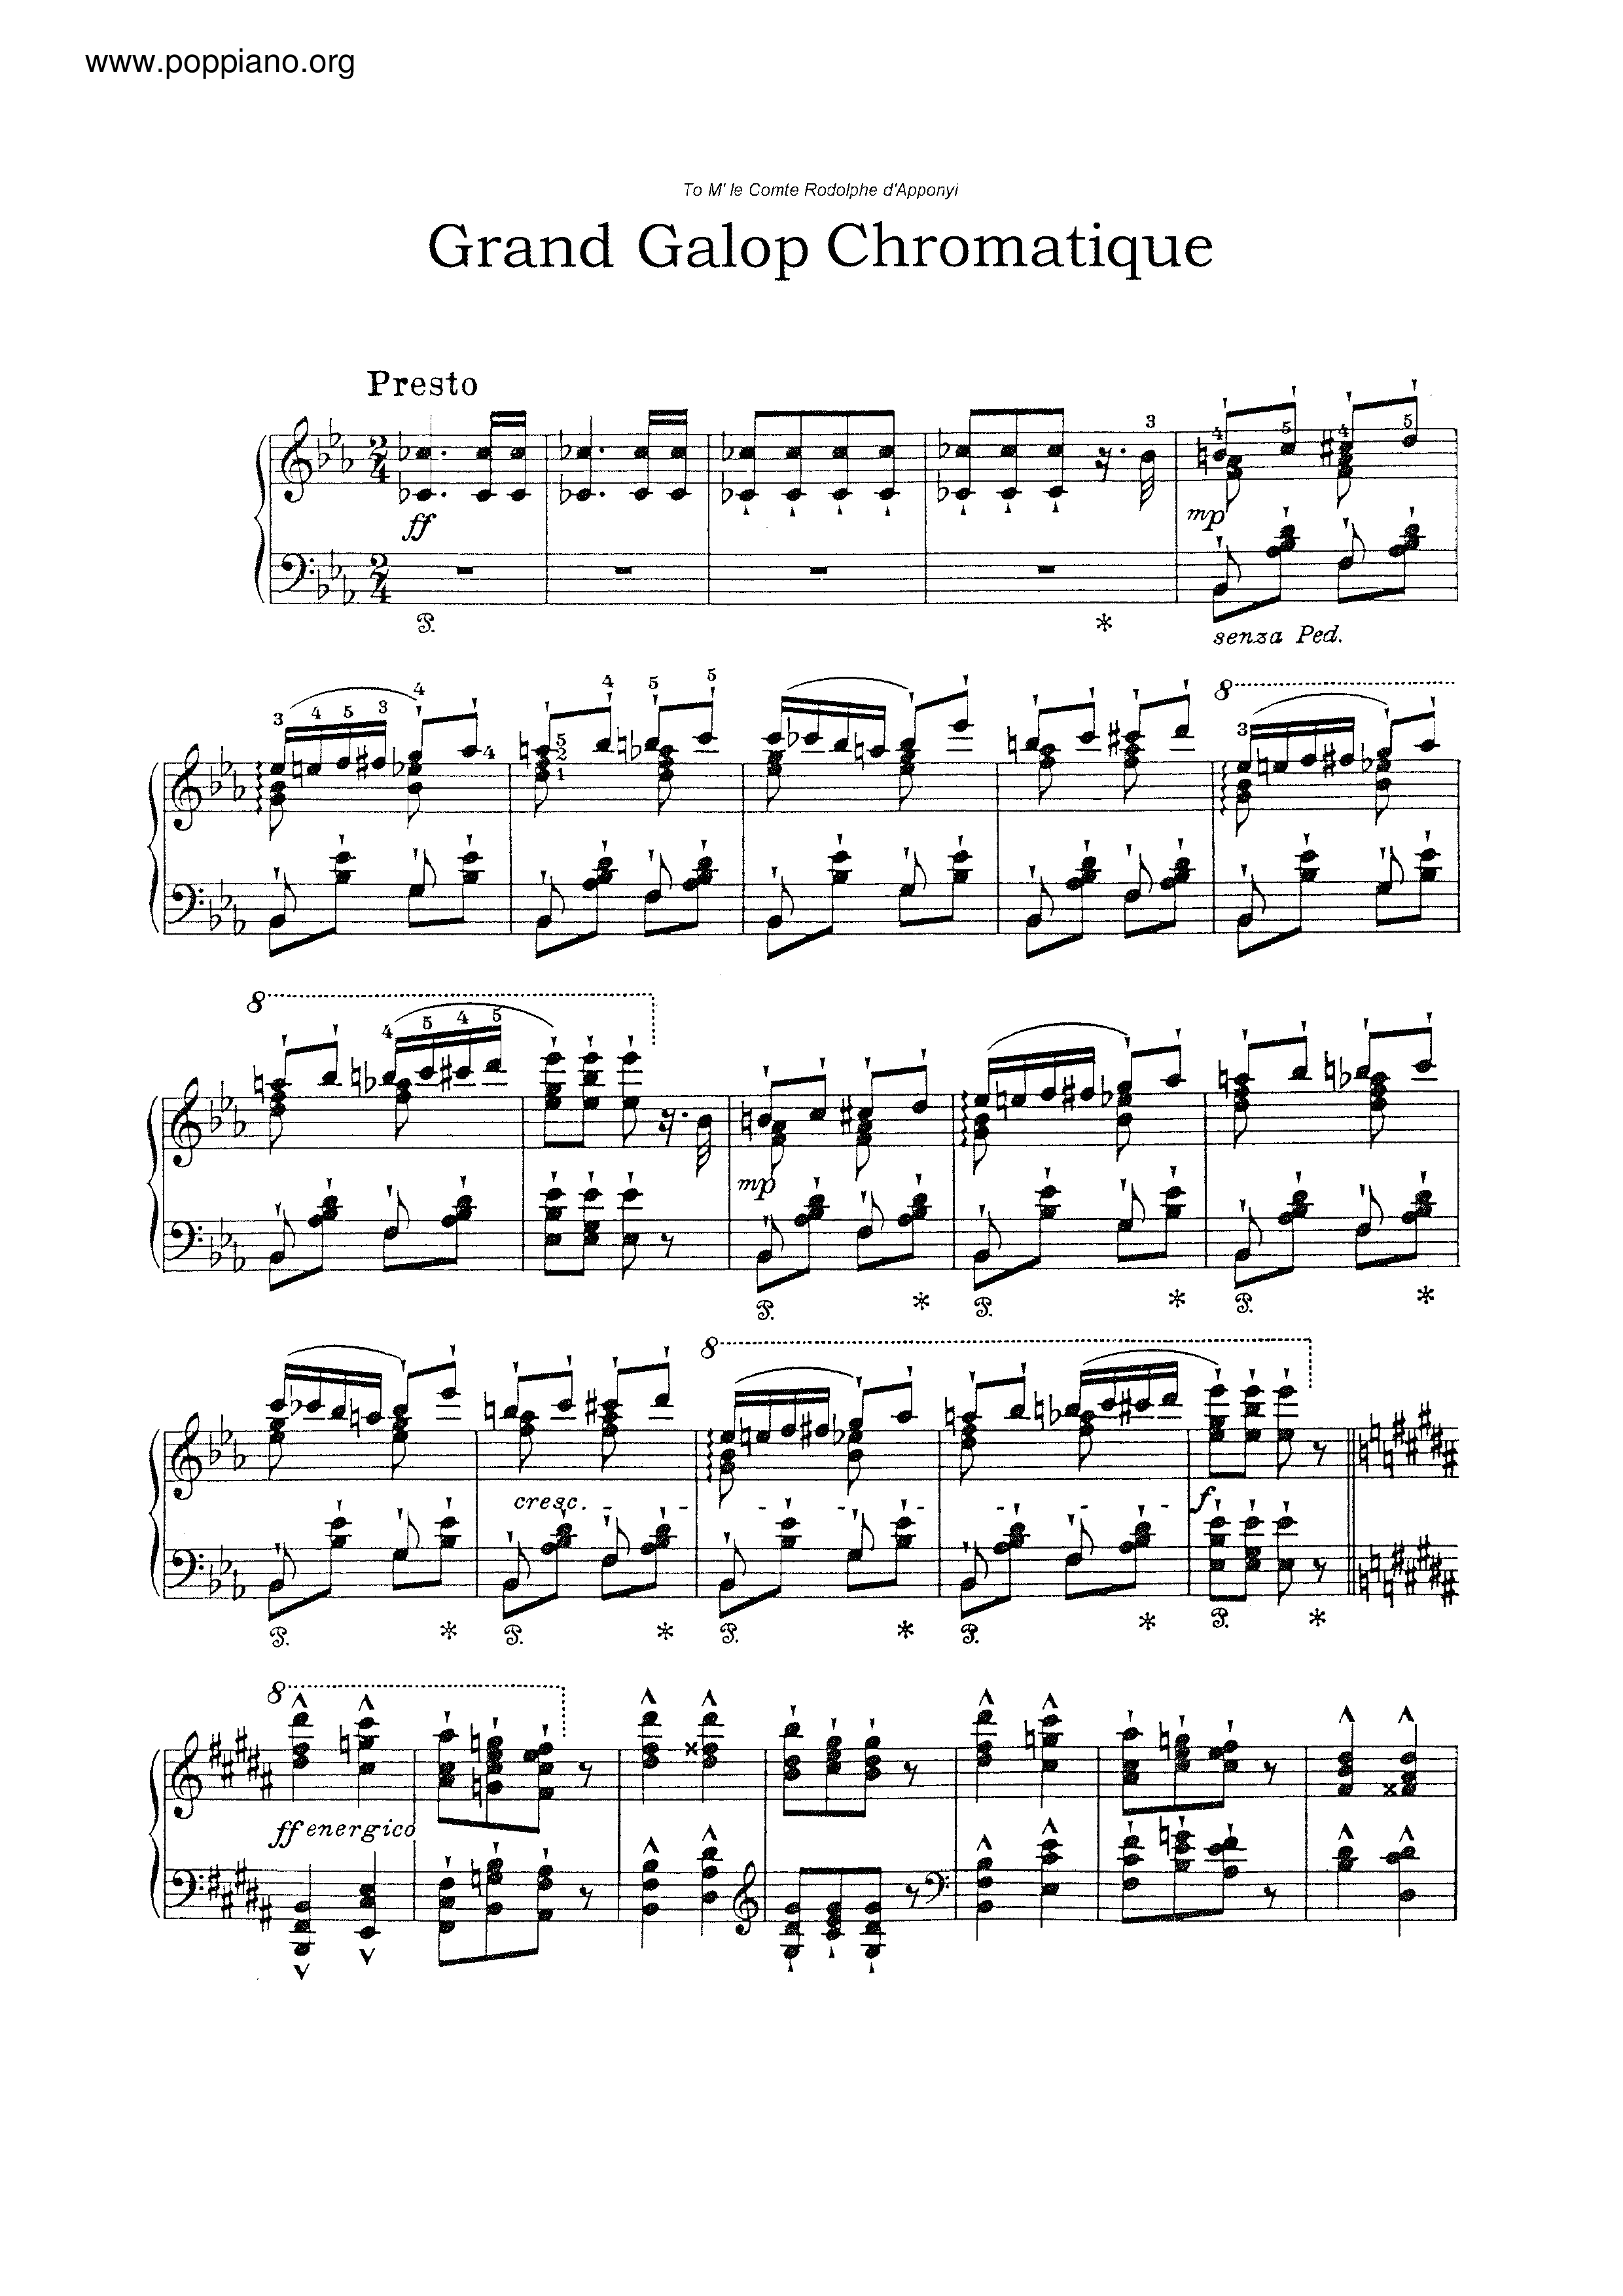 Grand Galop Chromatiqueピアノ譜